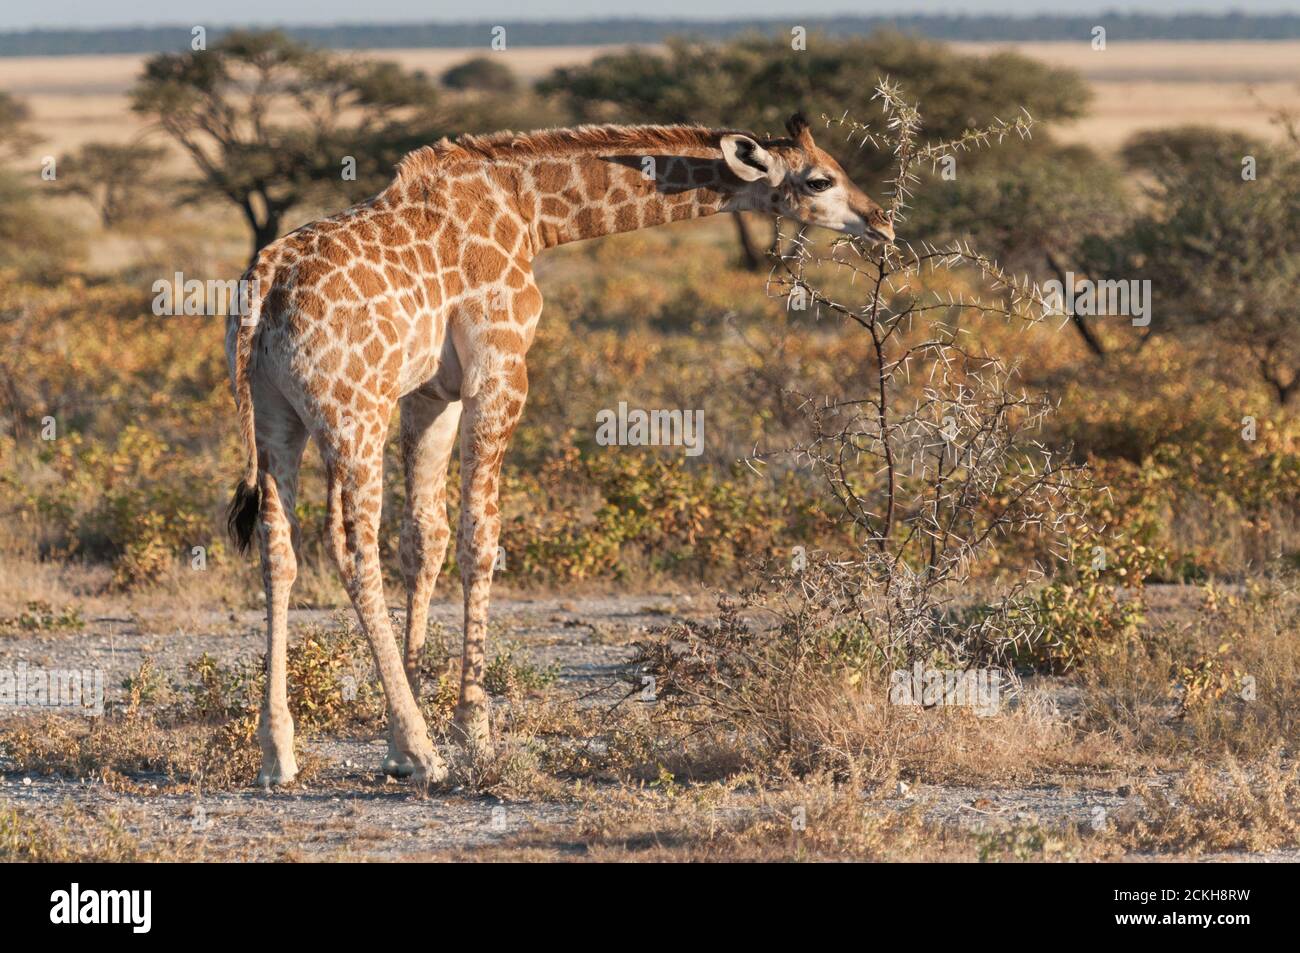 Giraffe baby in the Etosha national park in Namibia Stock Photo